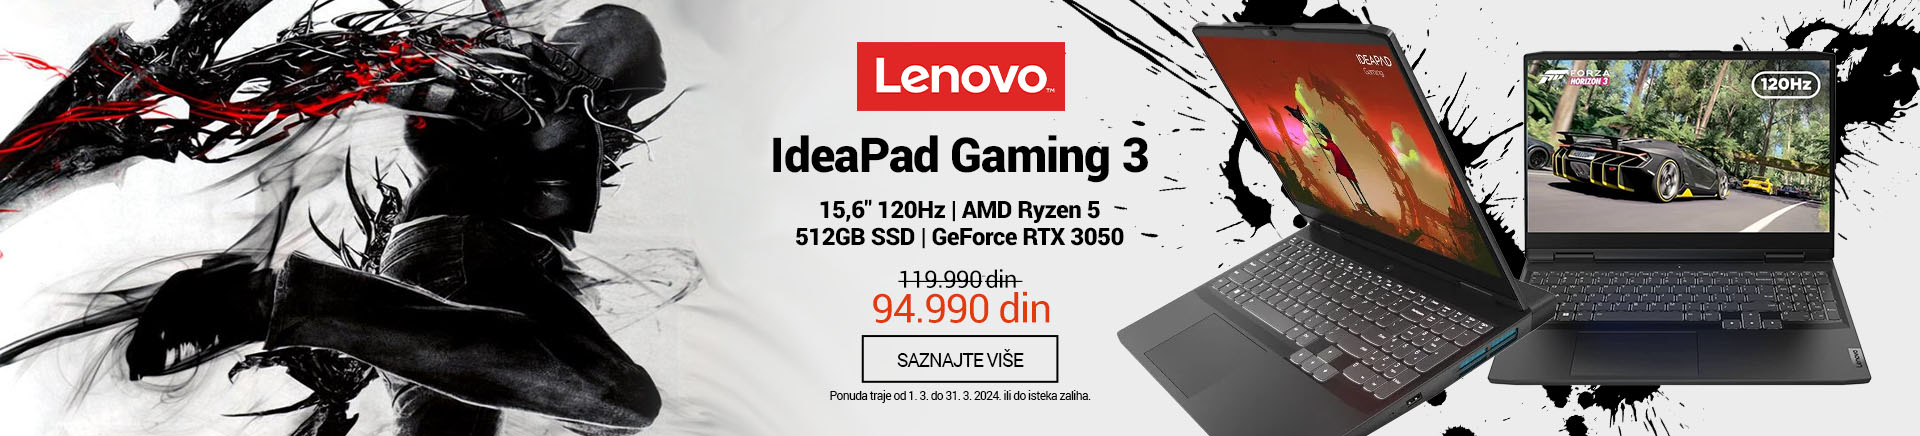 RS Lenovo IdeaPad Gaming 3 MOBILE 380 X 436.jpg